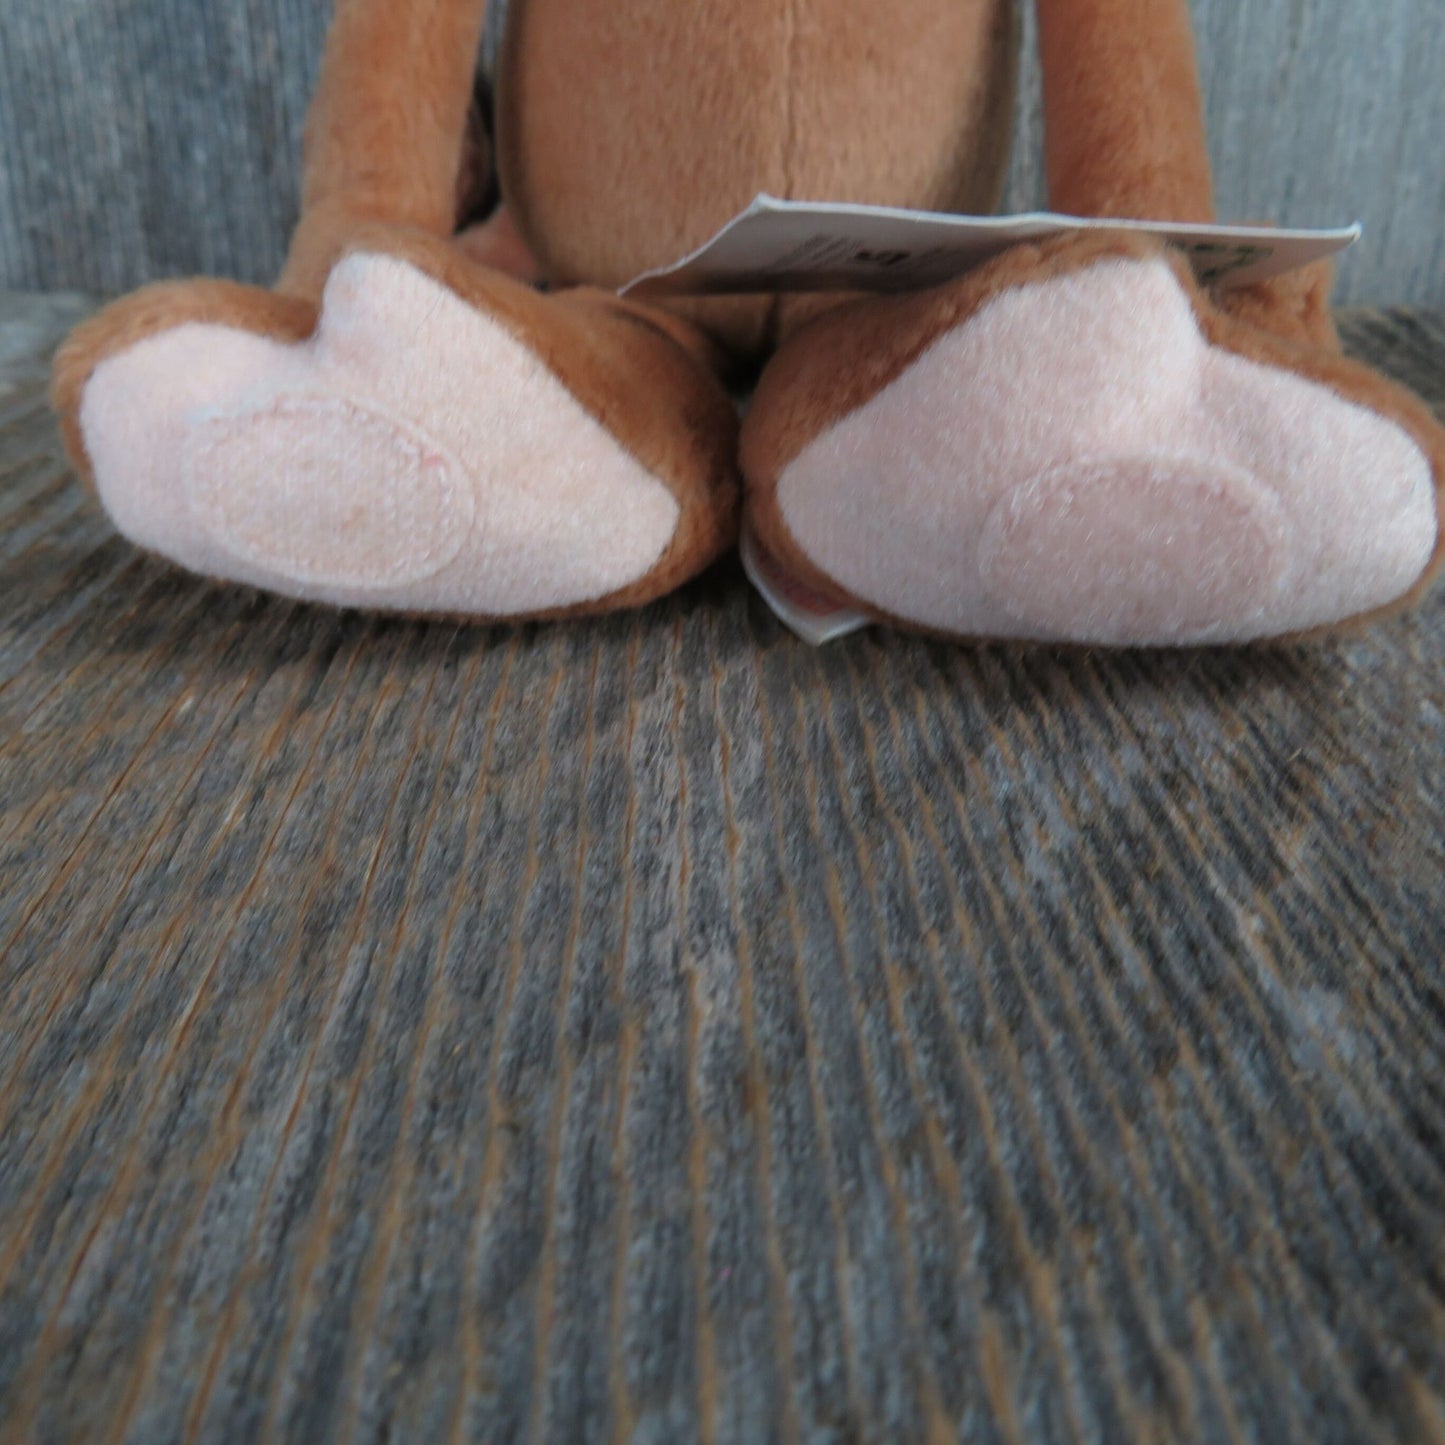 Vintage Monkey Plush Promise Ring Micanga Sekiguchi 1993 Wrapping Arms Legs Pink Butt Stuffed Animal